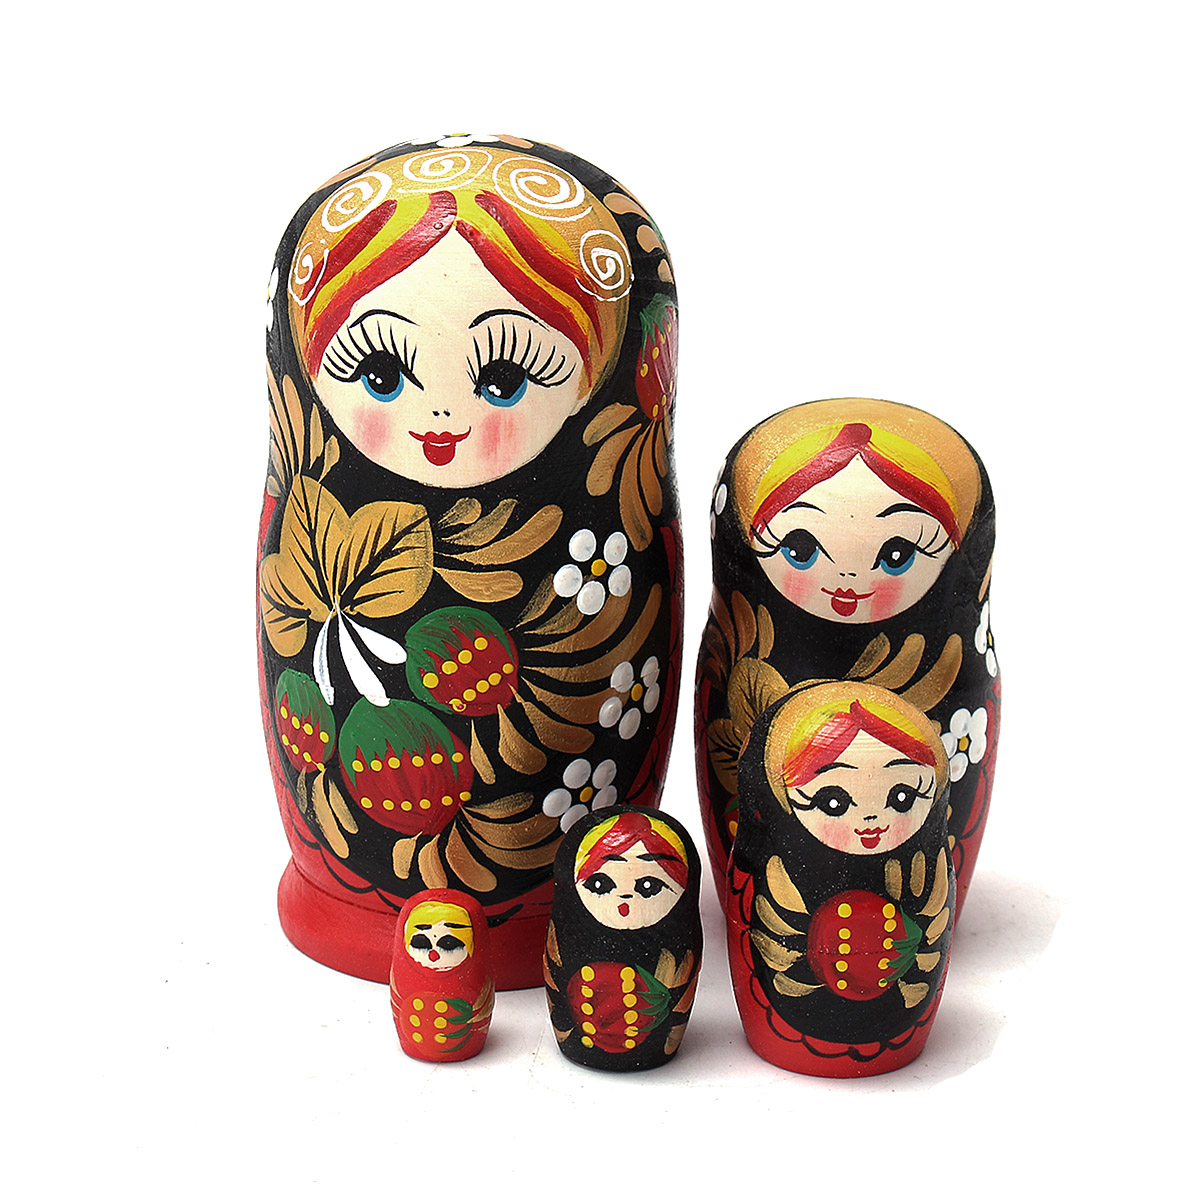 5PCSSet-Wooden-Doll-Matryoshka-Nesting-Russian-Babushka-Toy-Gift-Decor-Collection-1182666-3